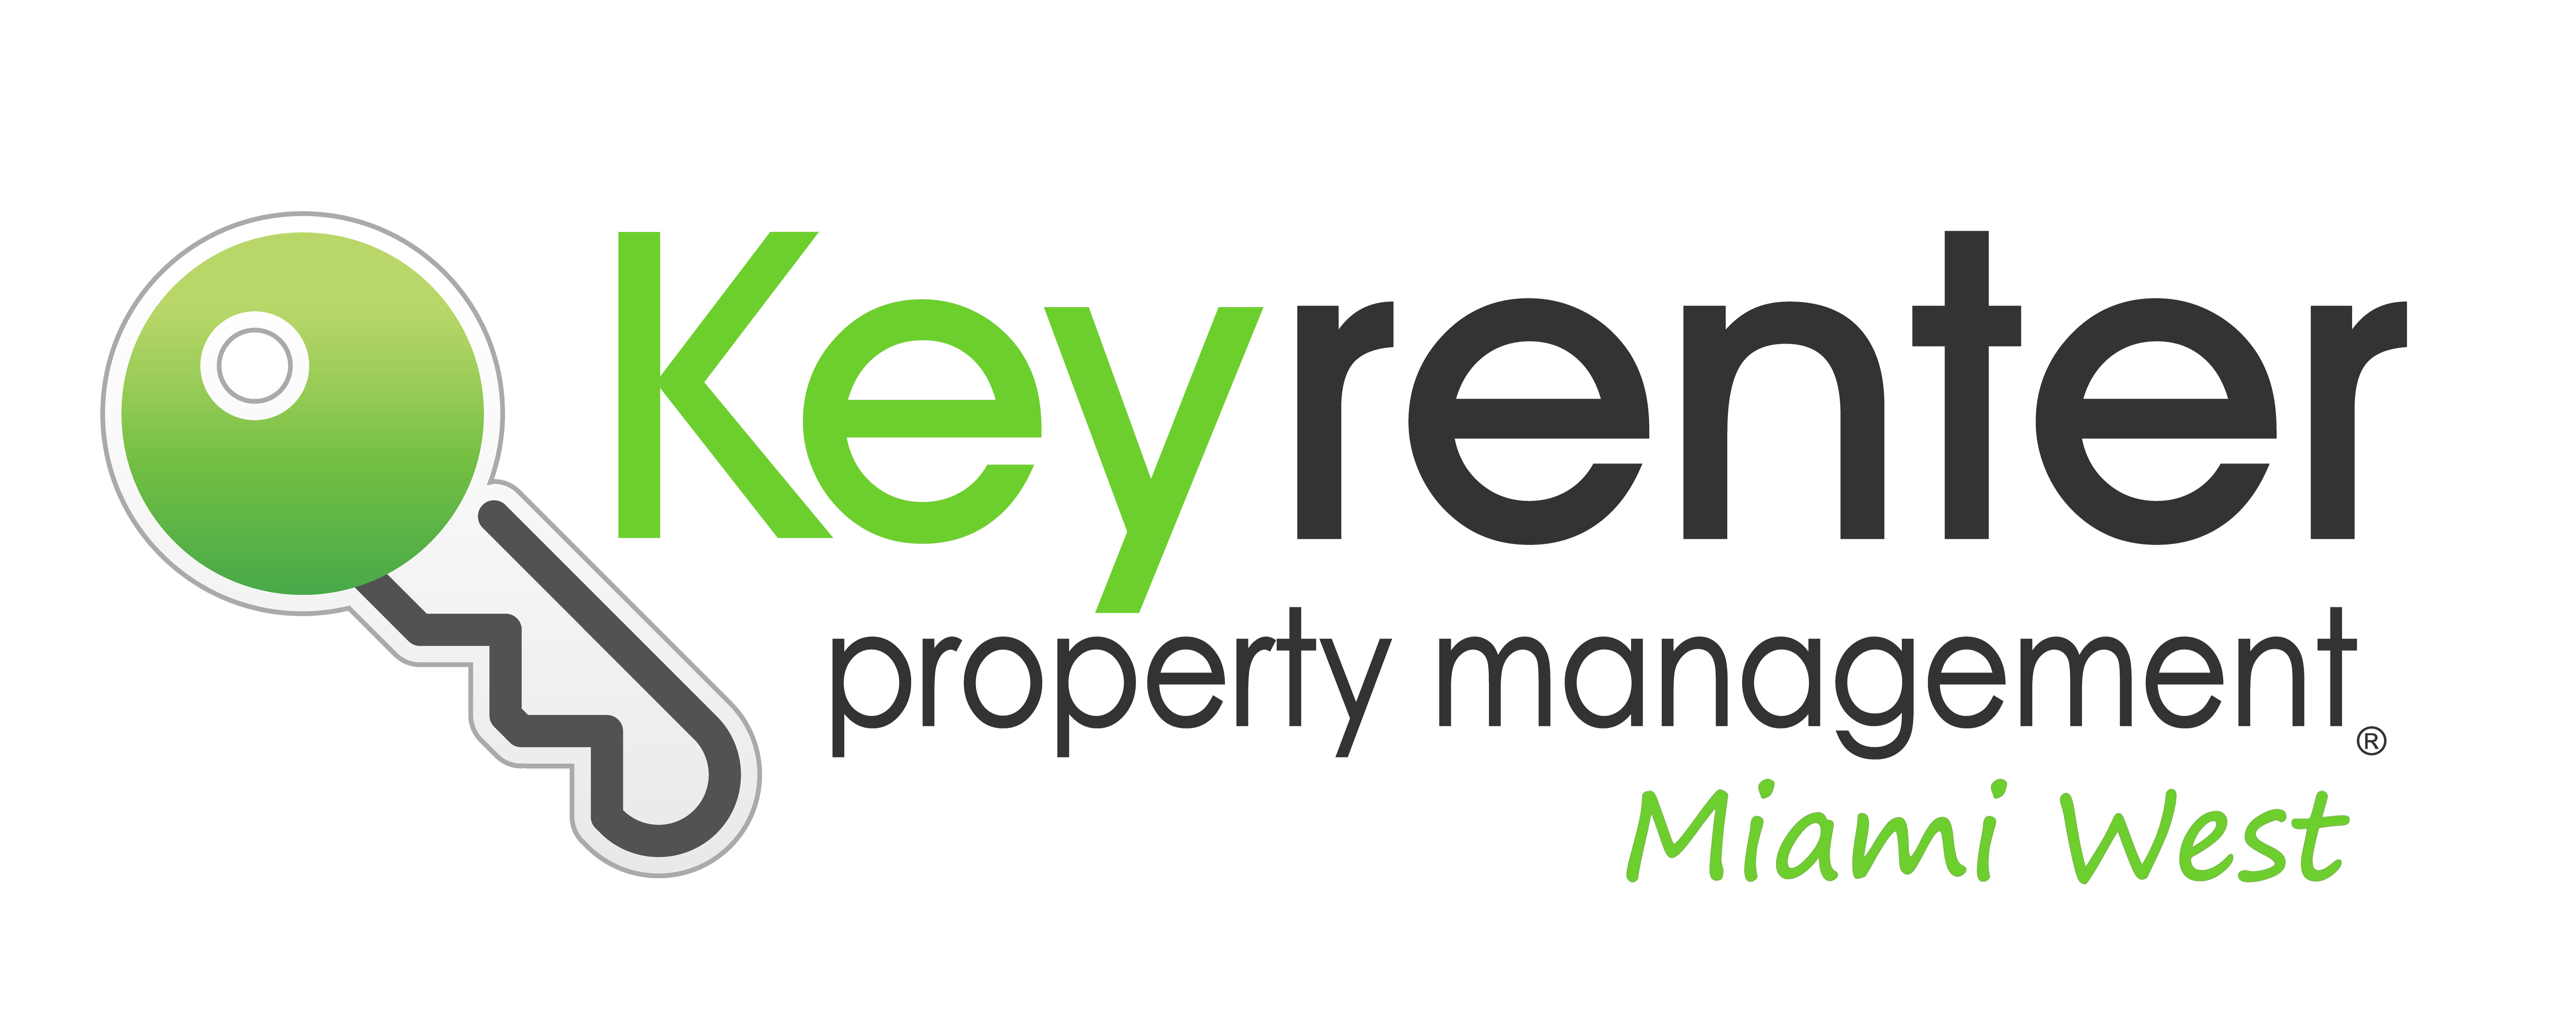 Keyrenter Logo